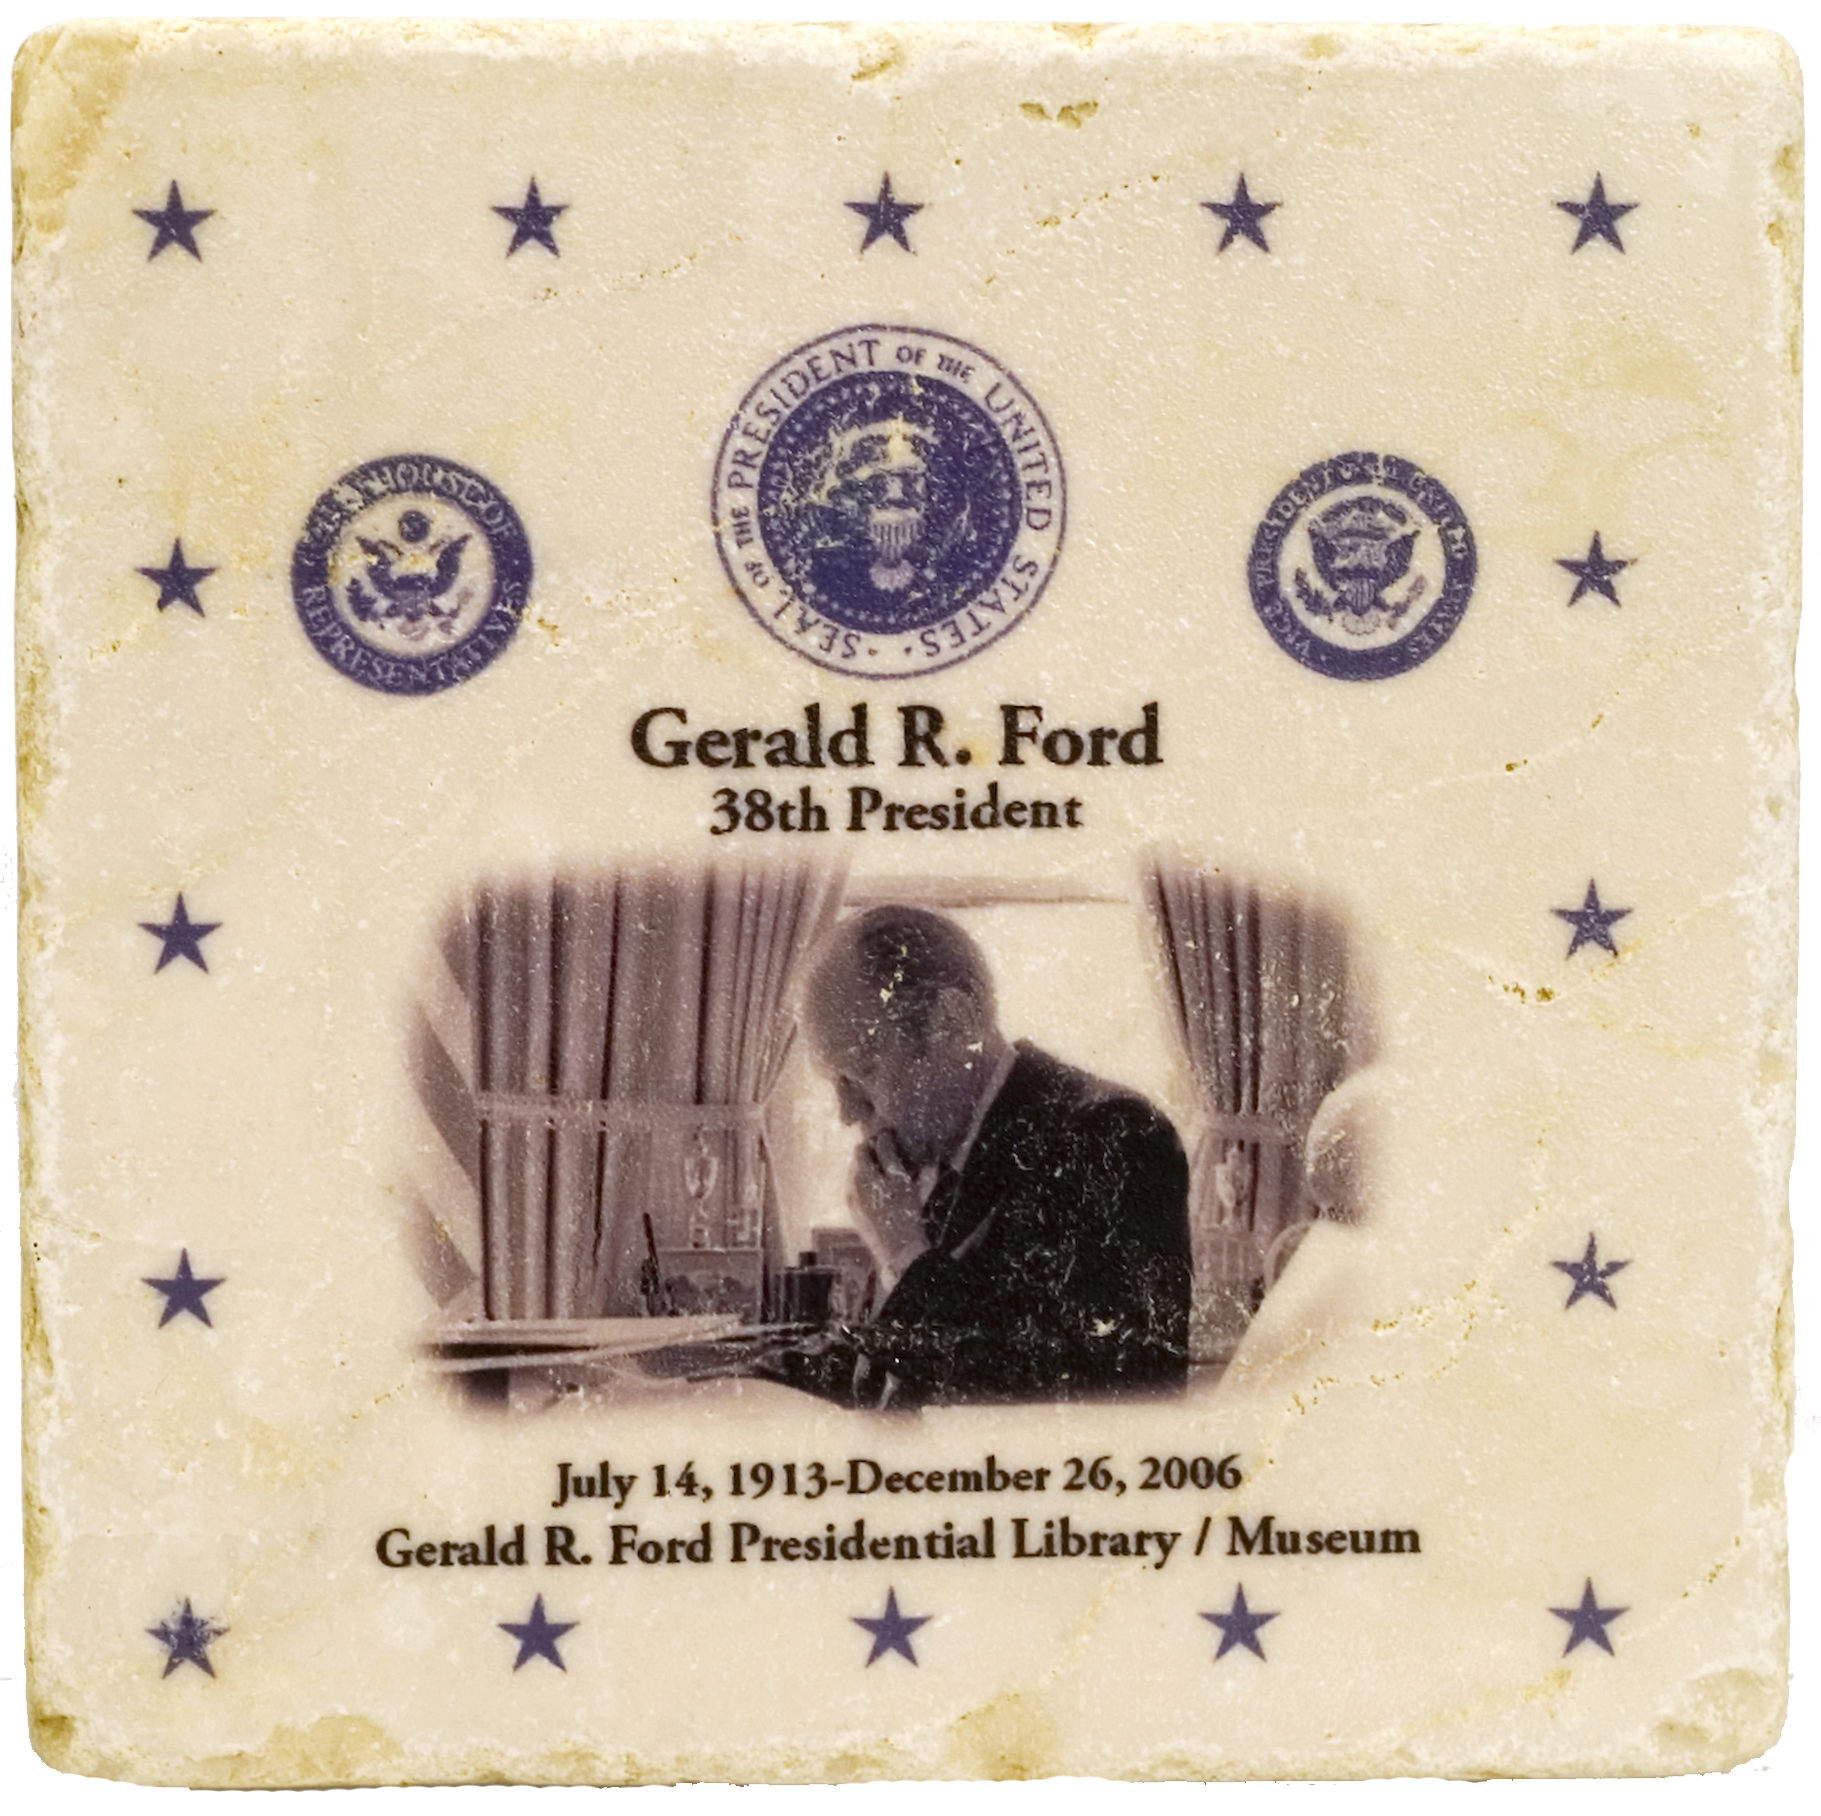 President Ford at Desk Coaster